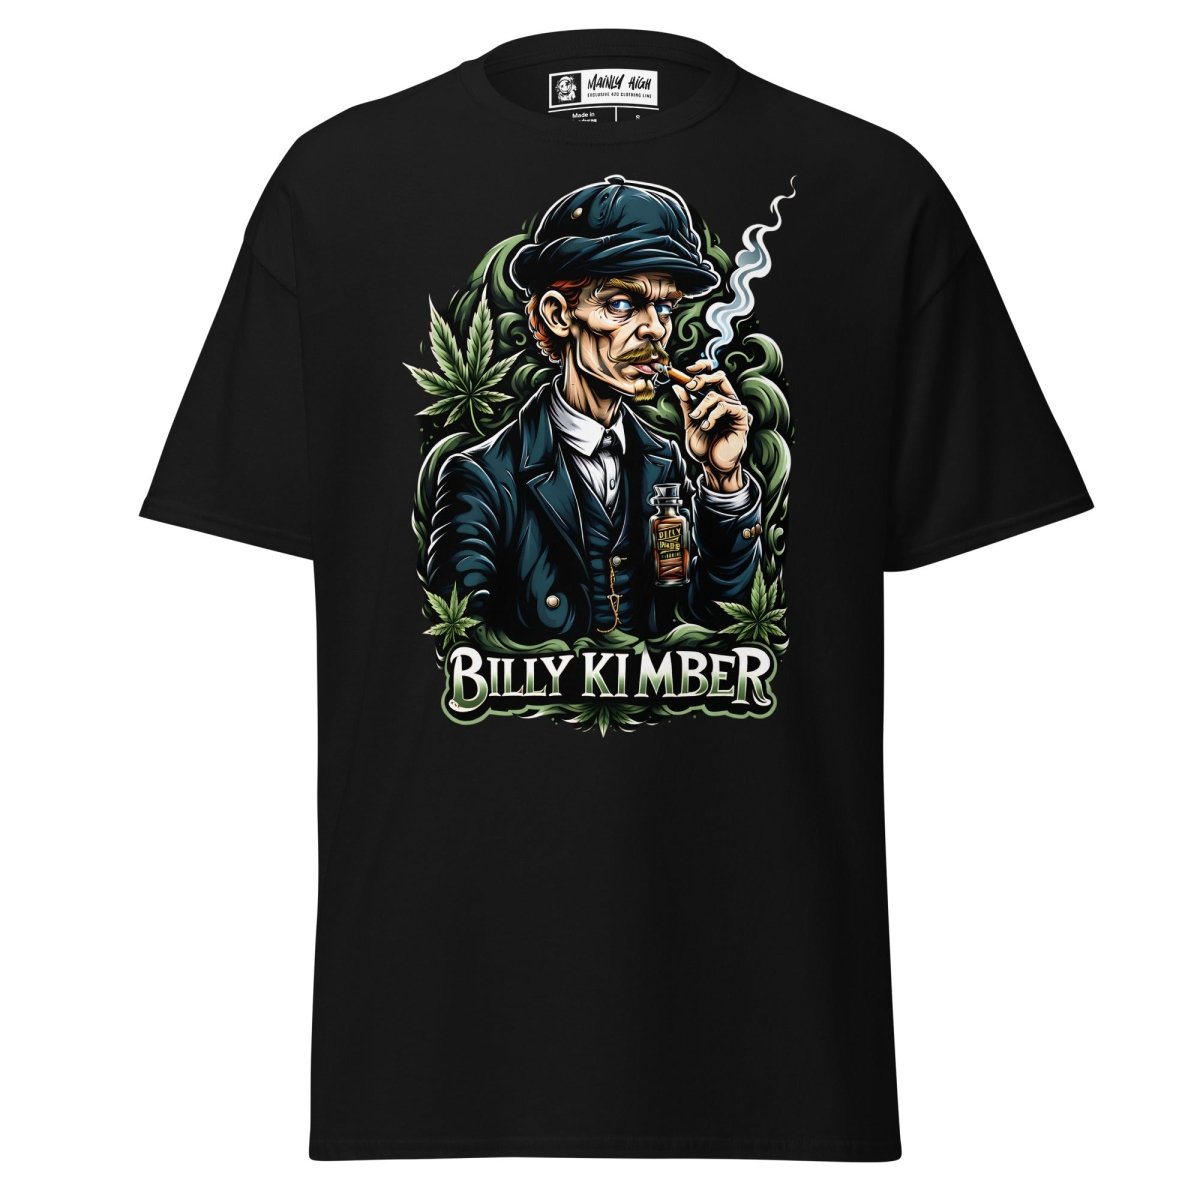 Billy Kimber T-Shirt - Mainly High